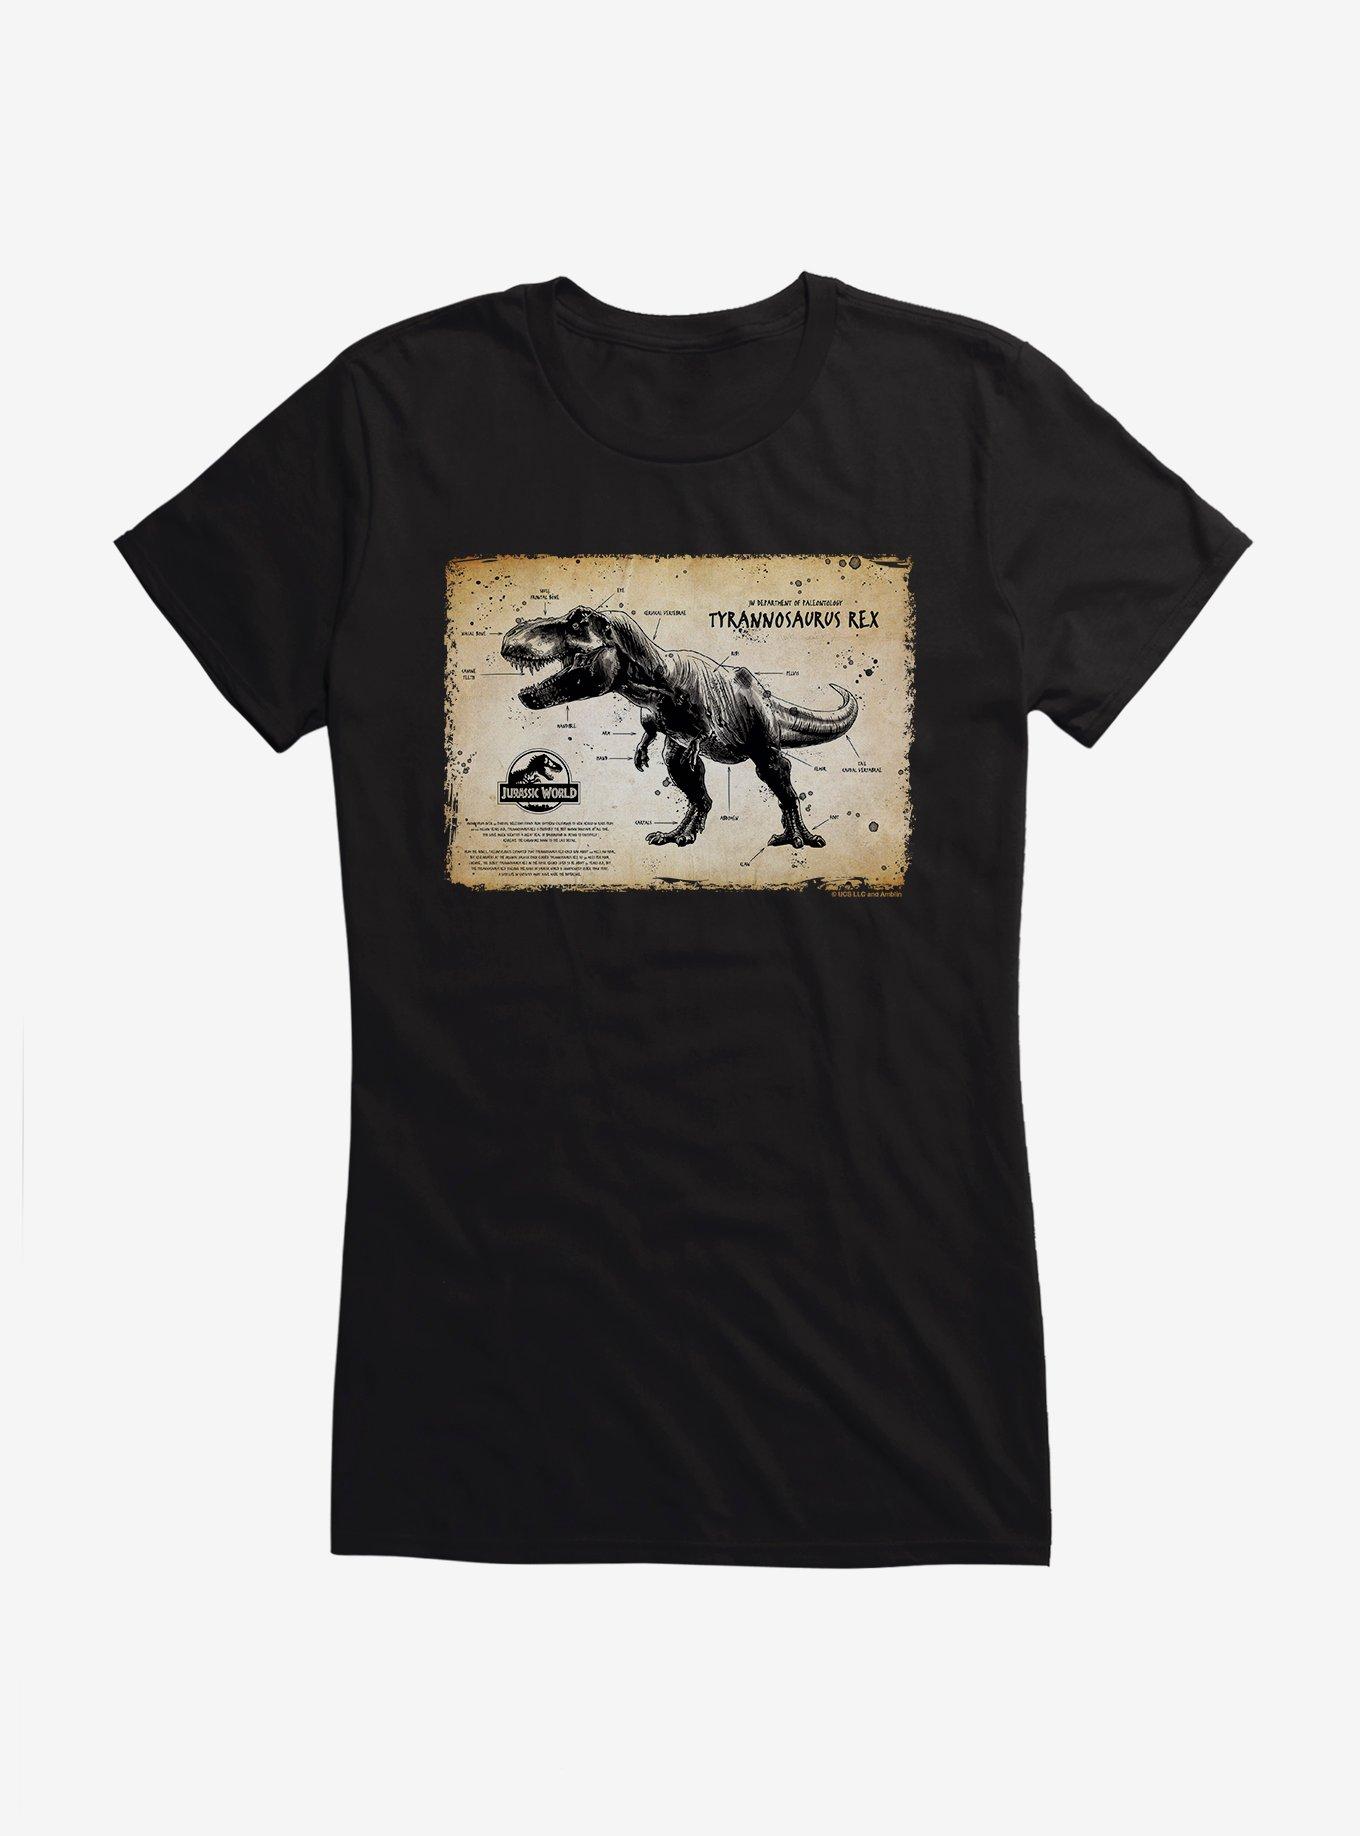 Jurassic World Tyrannosaurus Rex Girl's T-Shirt